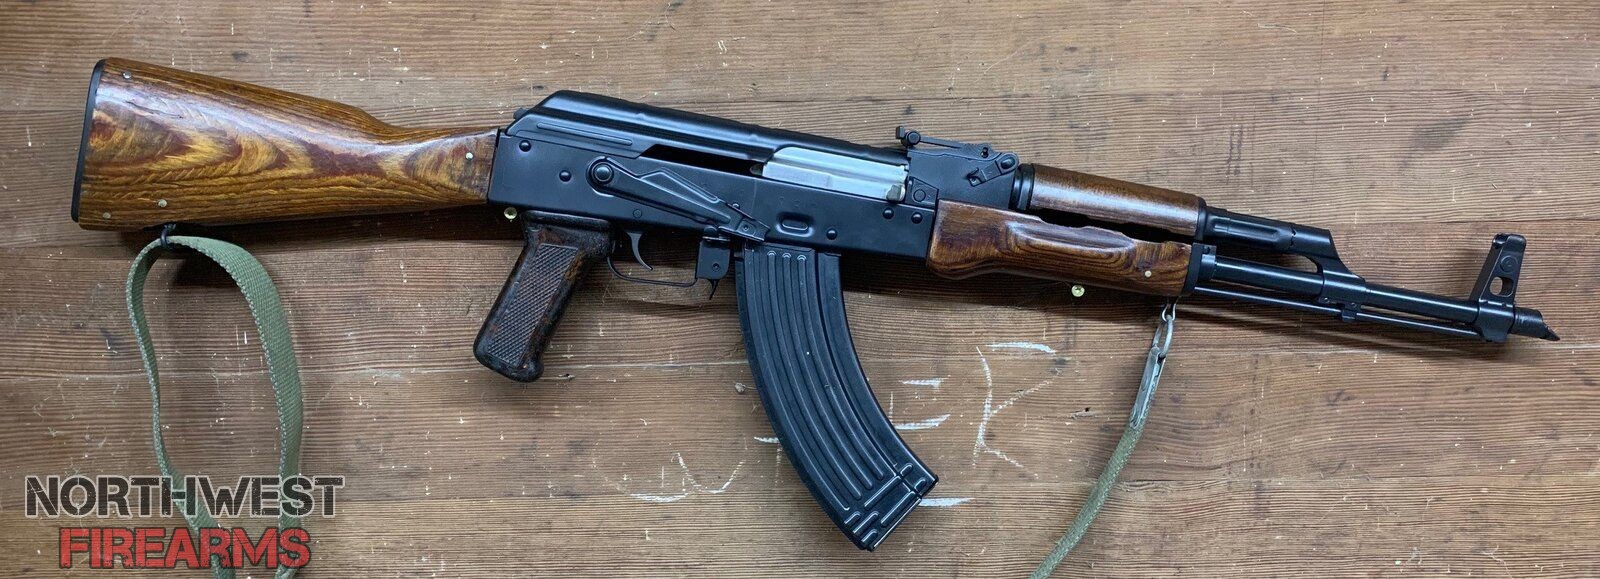 Lee Armory Polish Premium AK47 | Northwest Firearms